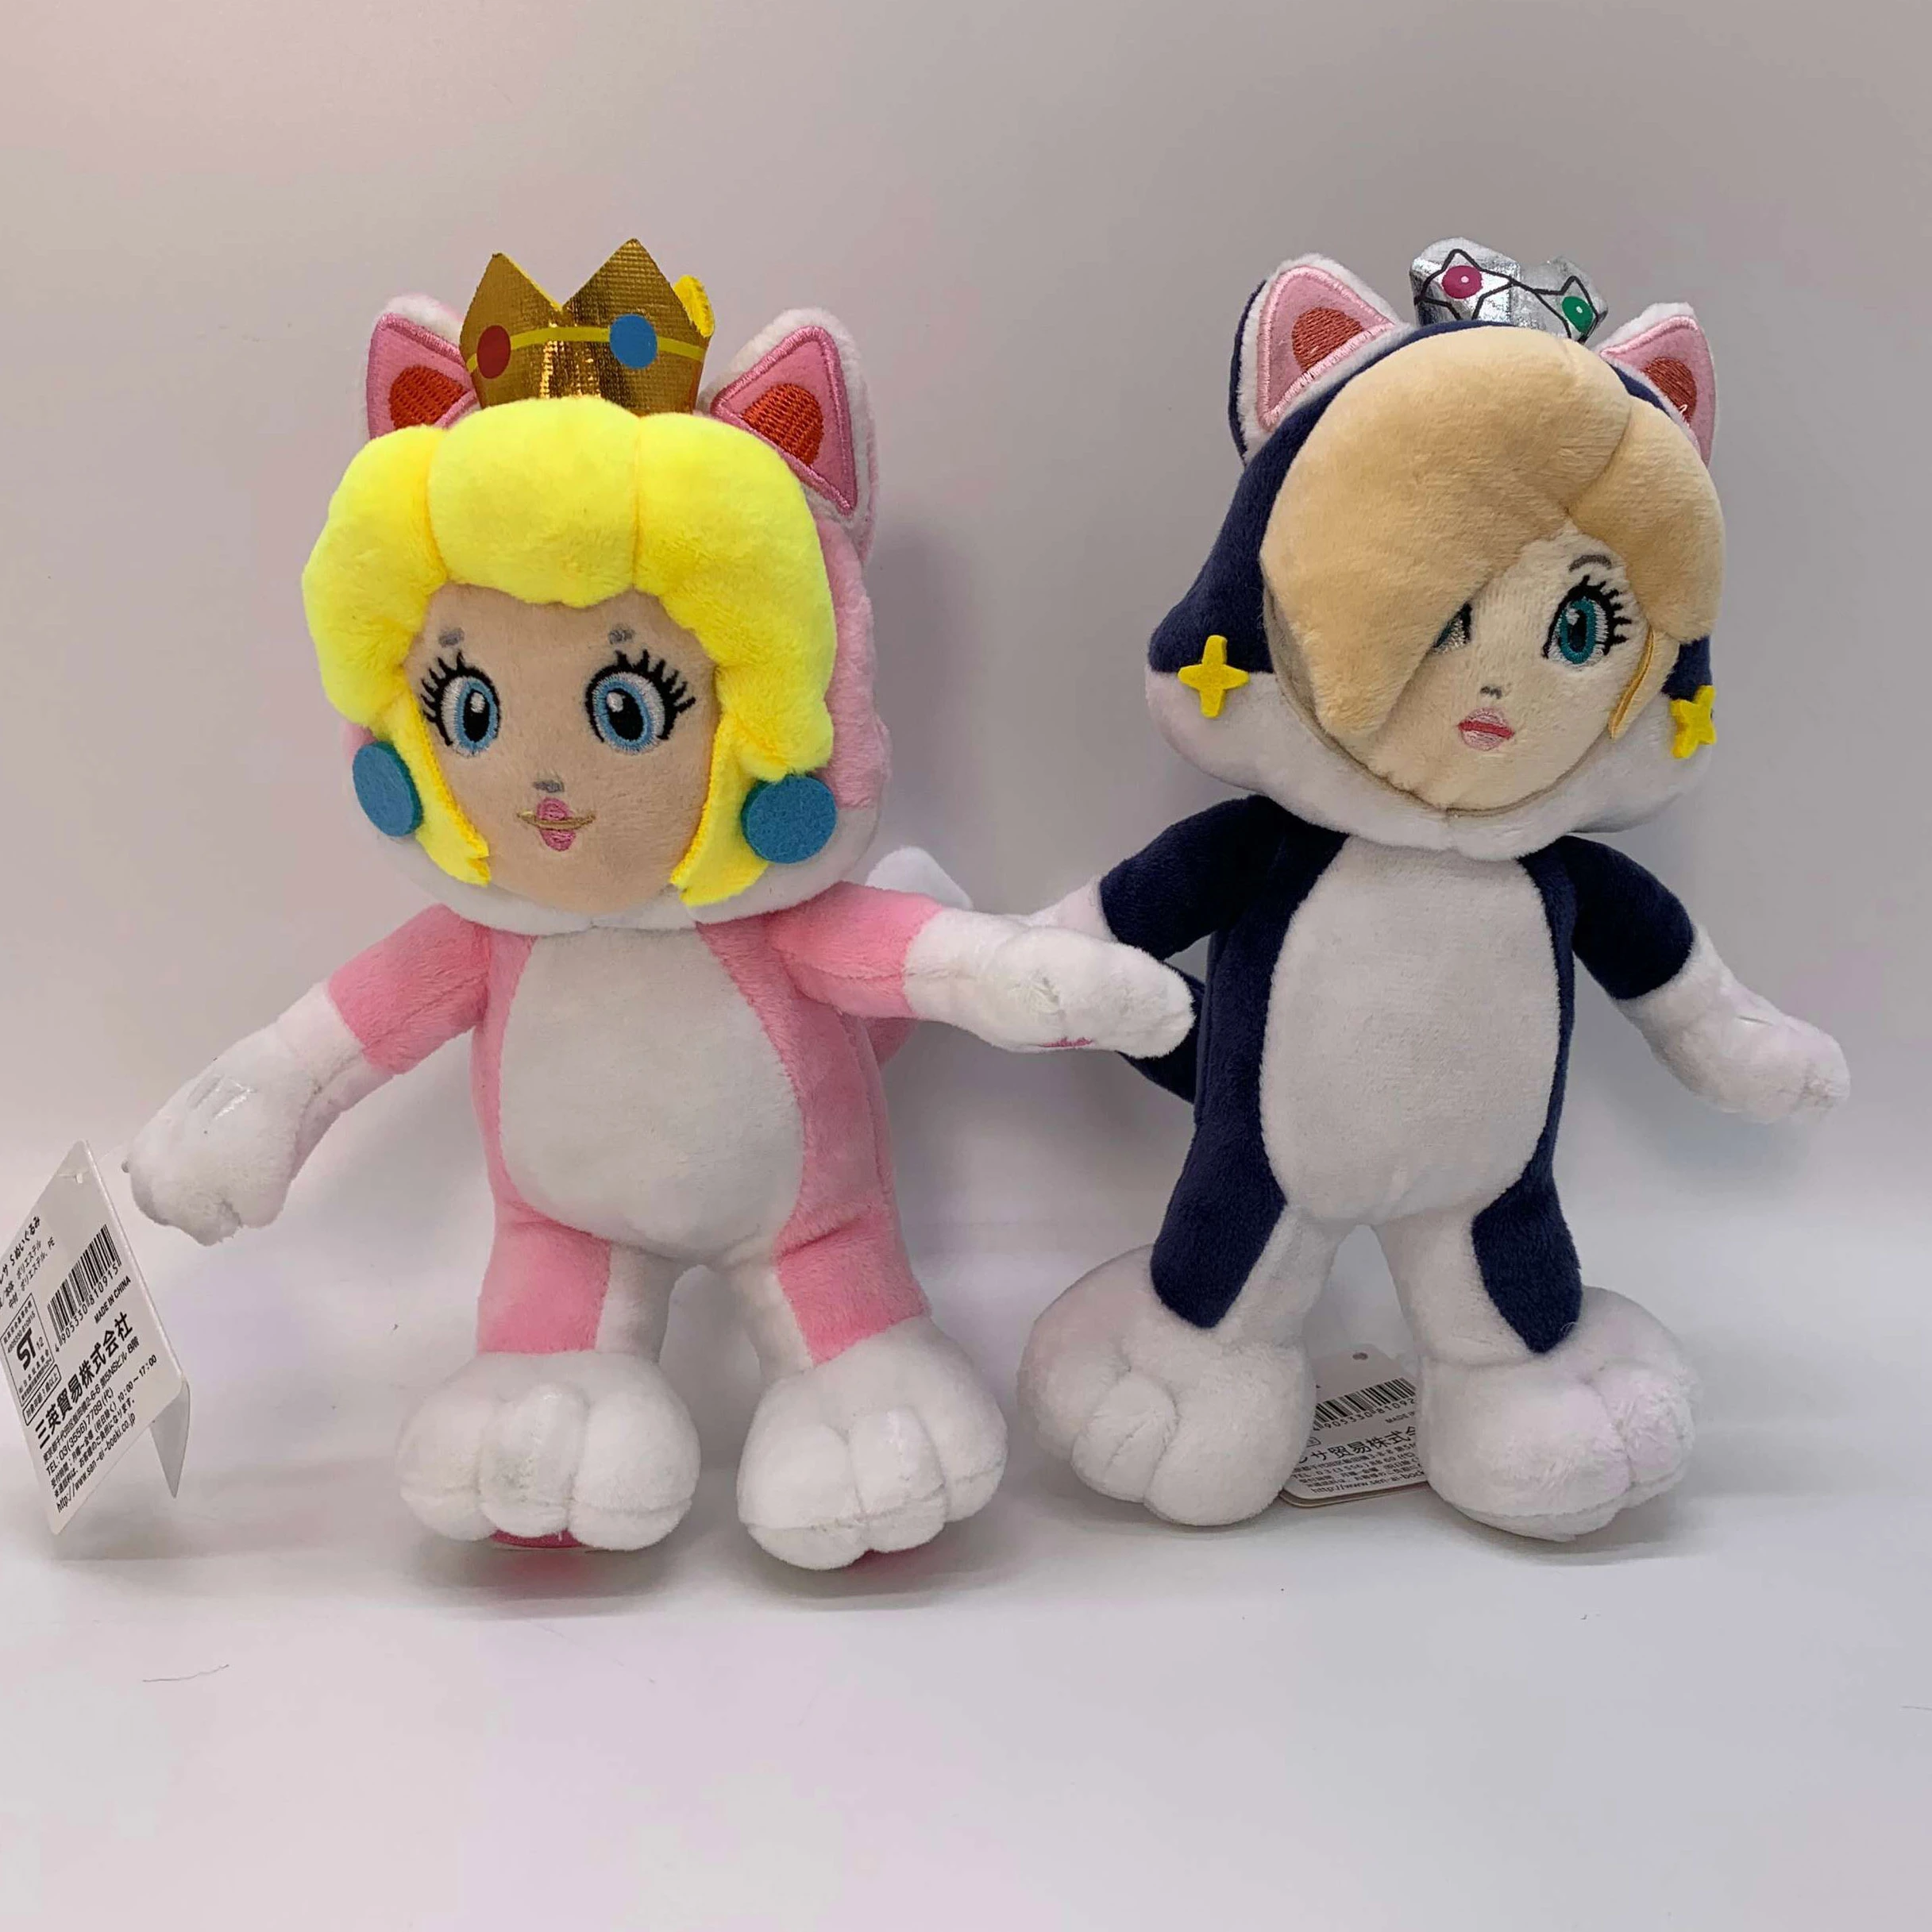 2X Super Mario Bros Cat Princess Peach Rosalina Plush Toy Stuffed Animal Doll 8" 